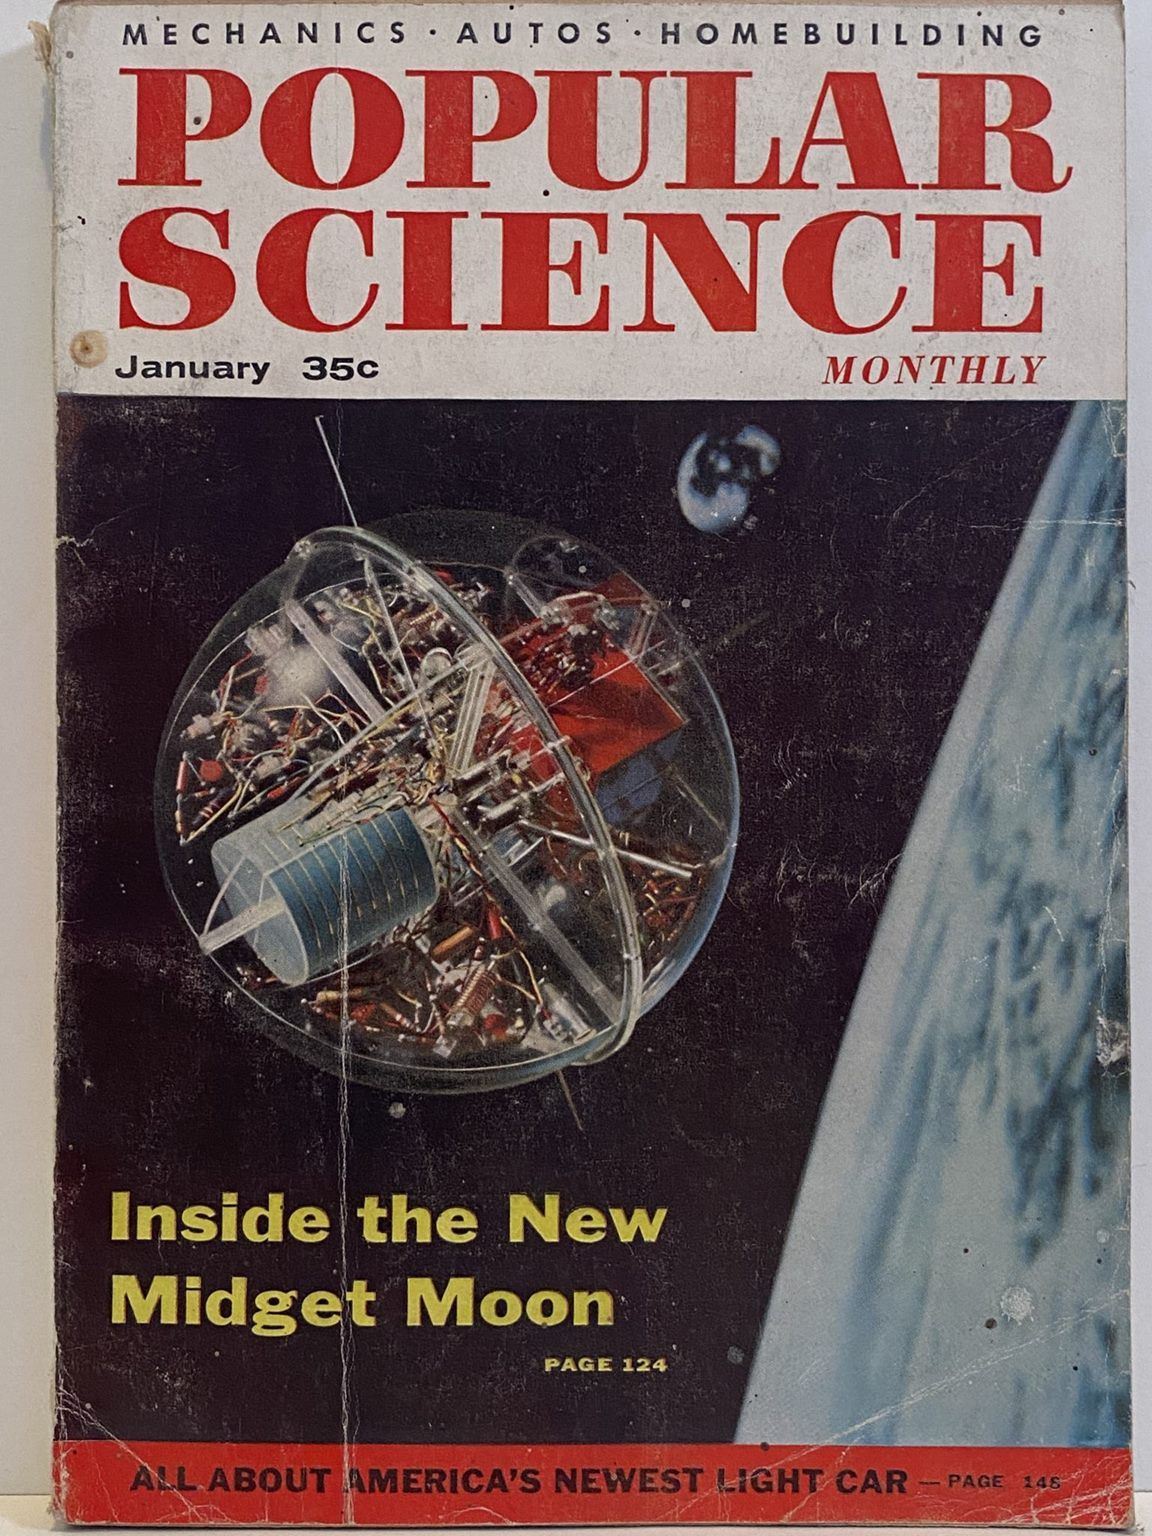 VINTAGE MAGAZINE: Popular Science, Vol. 168, No. 1 - January 1956